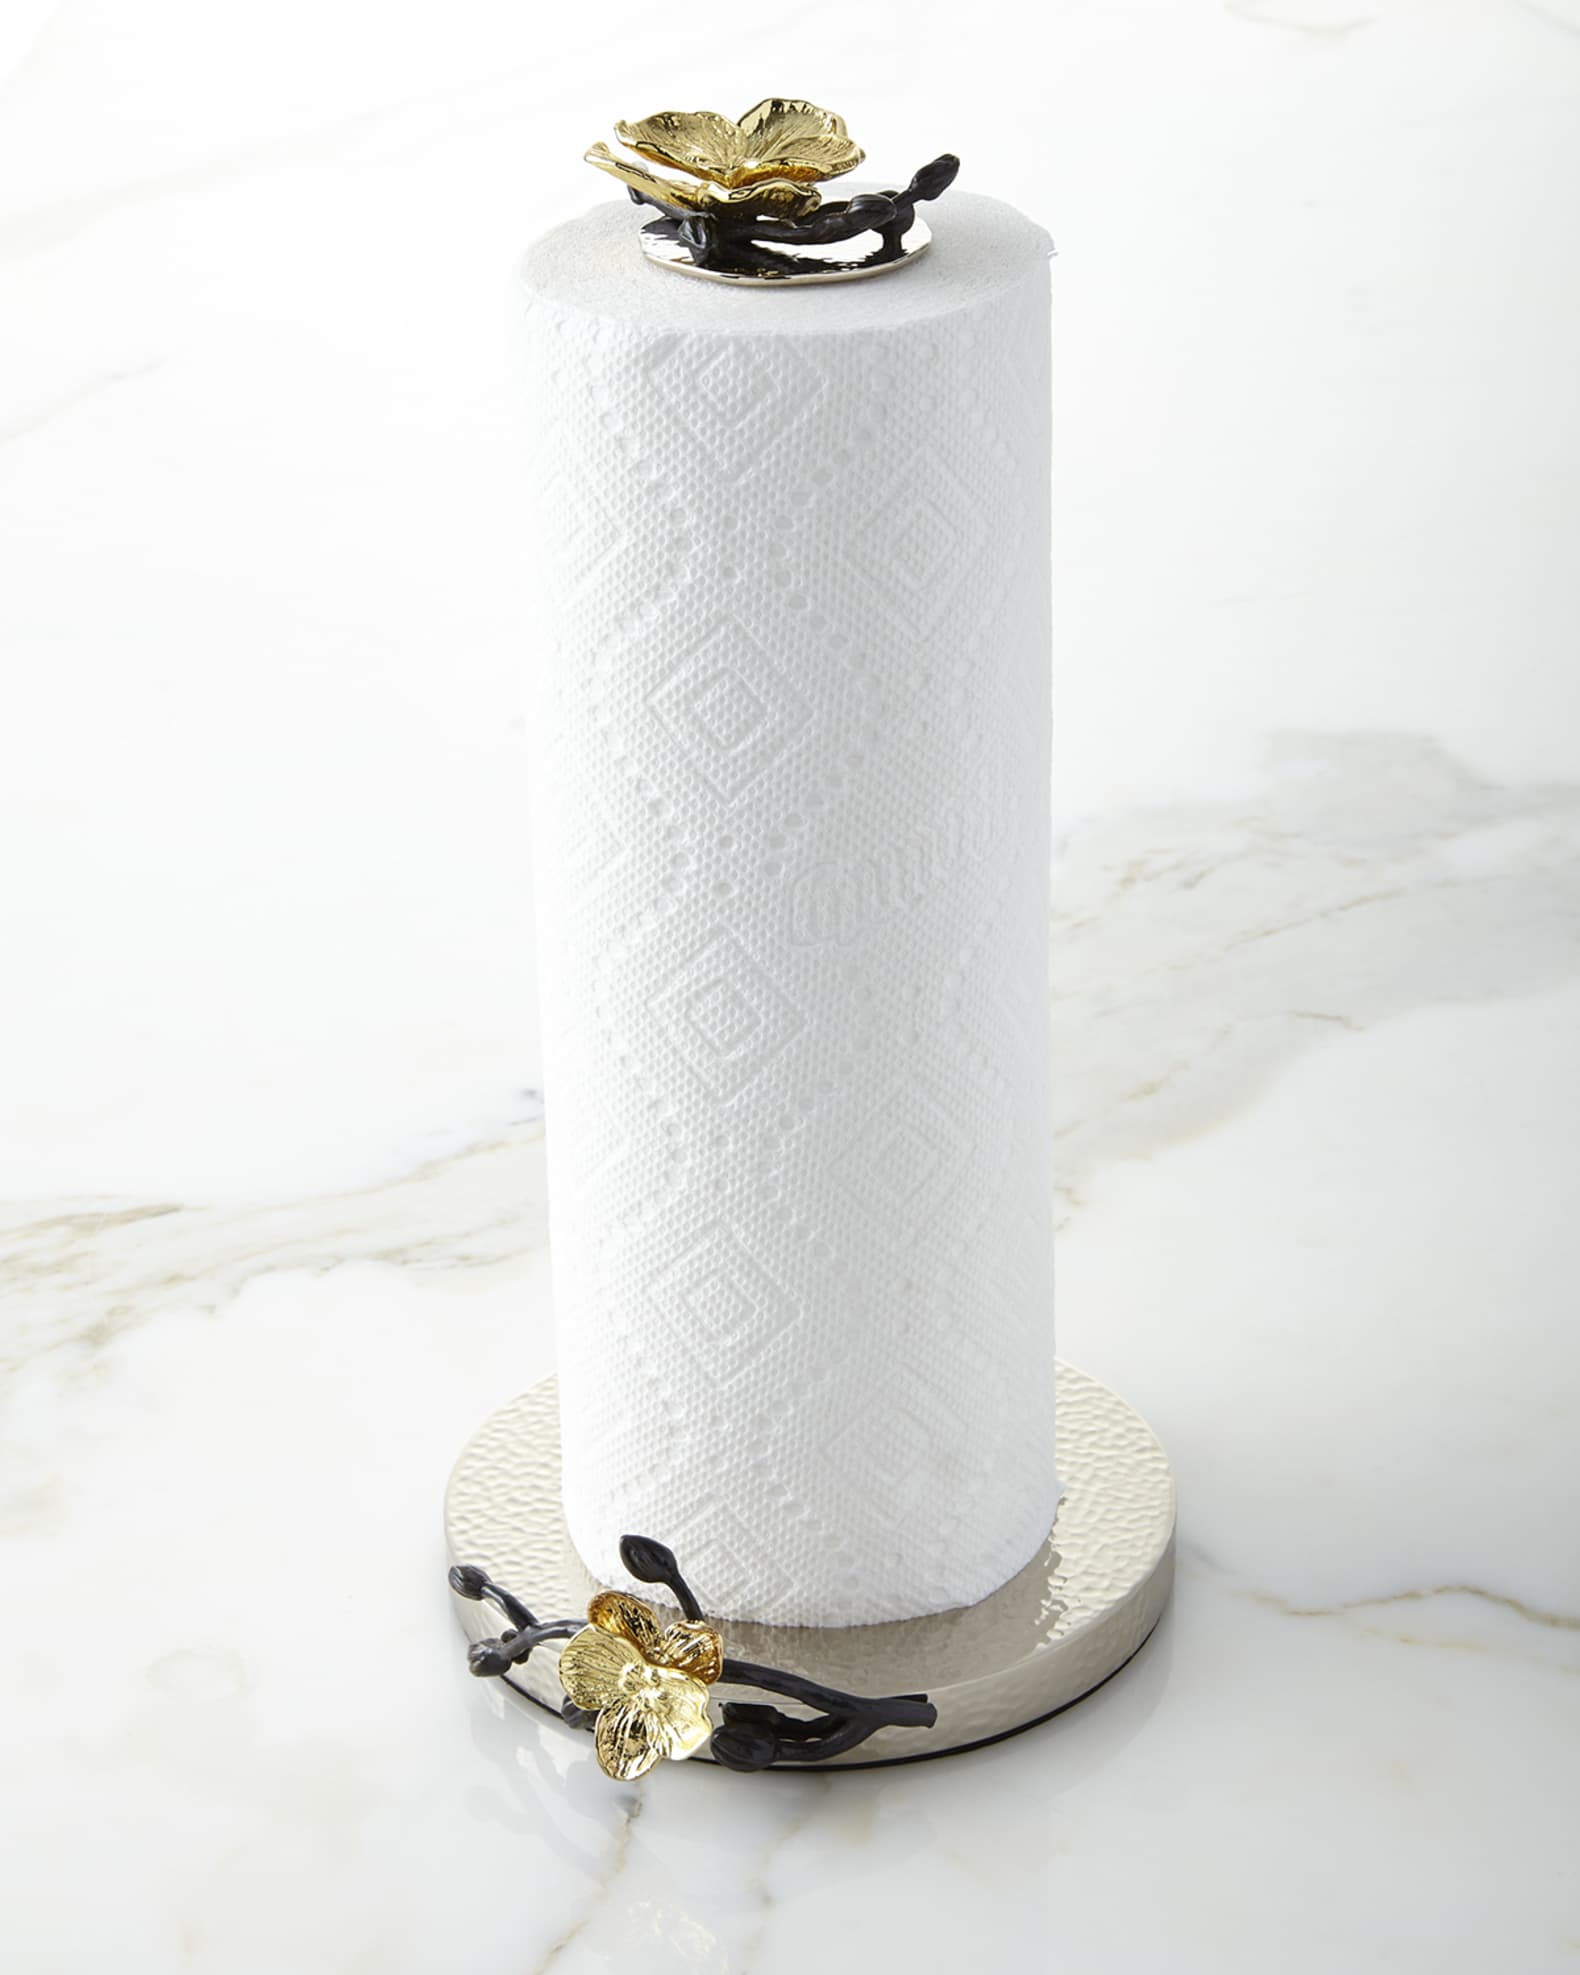 Michael Aram Gold Orchid Paper Towel Holder